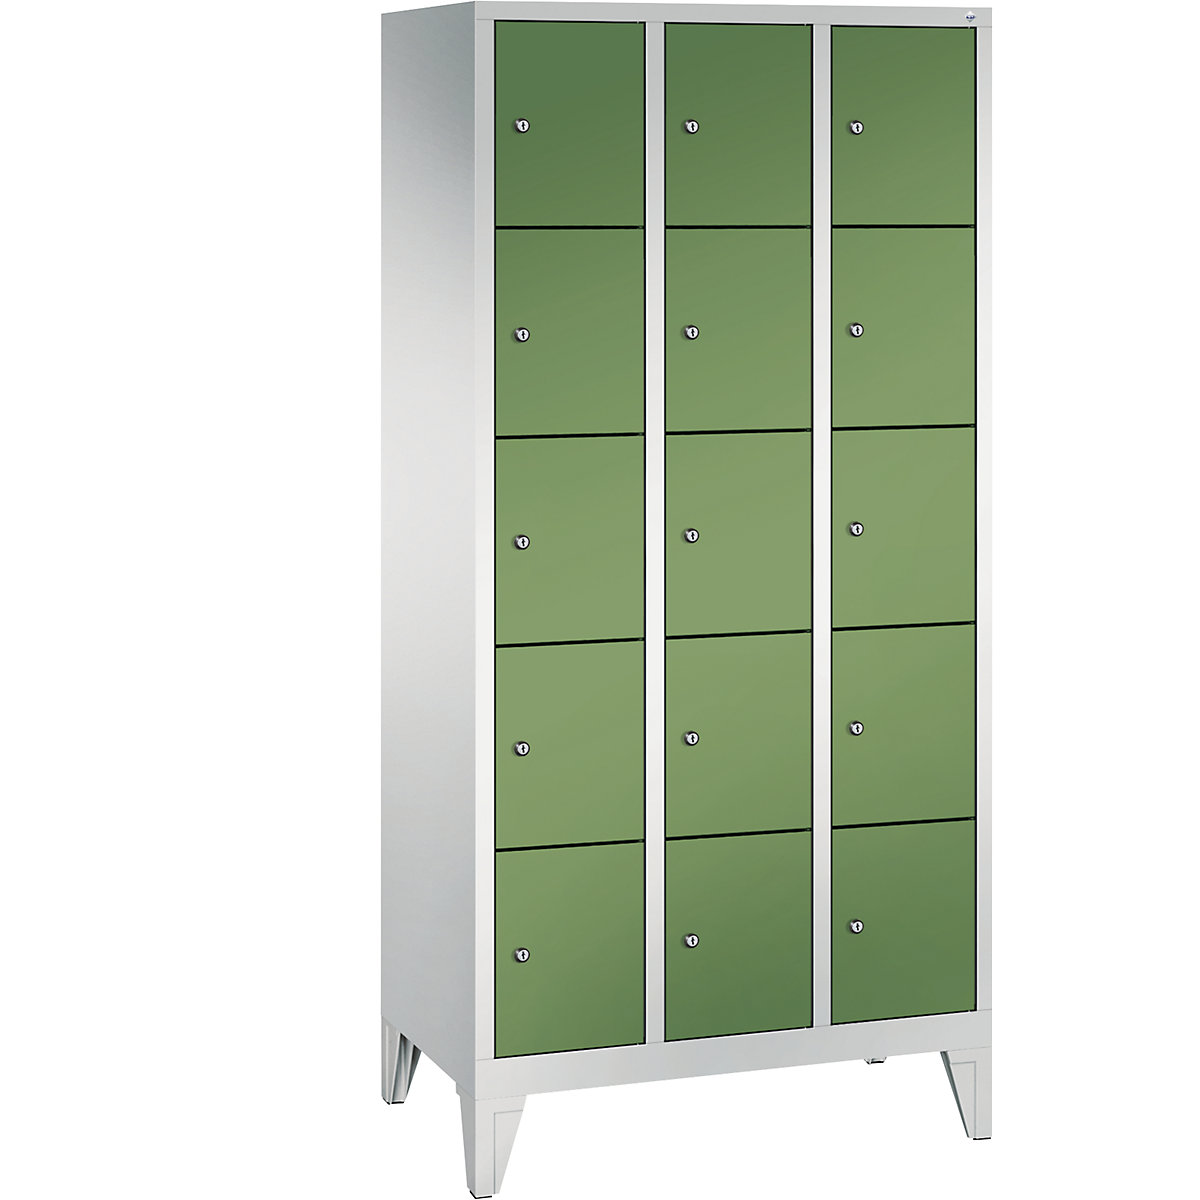 CLASSIC locker unit with feet – C+P, 3 compartments, 5 shelf compartments each, compartment width 300 mm, light grey / reseda green-9